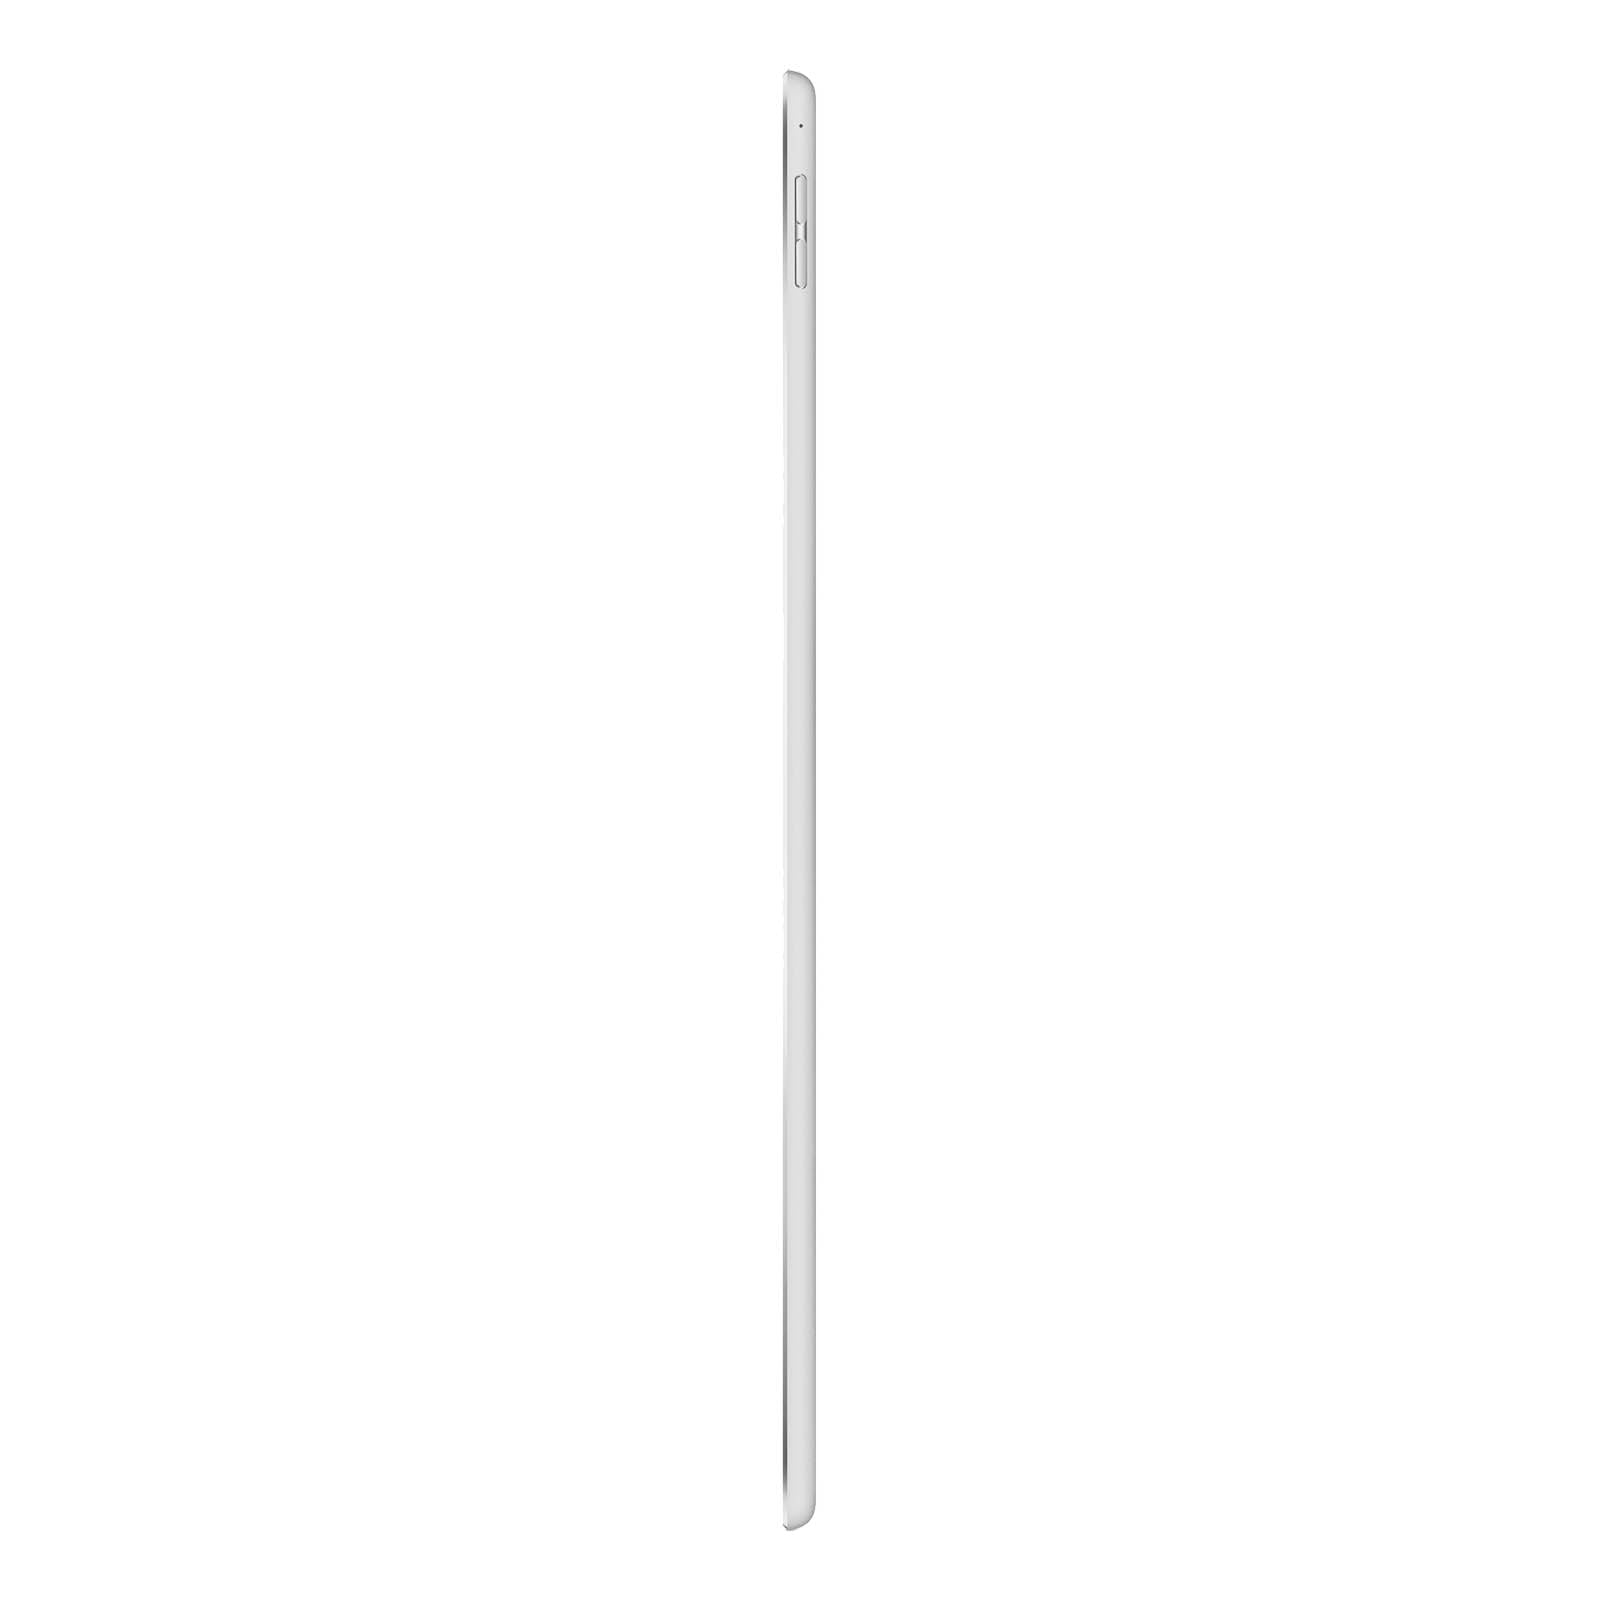 iPad Pro 12.9 Inch 3rd Gen 512GB Silver Good - Unlocked